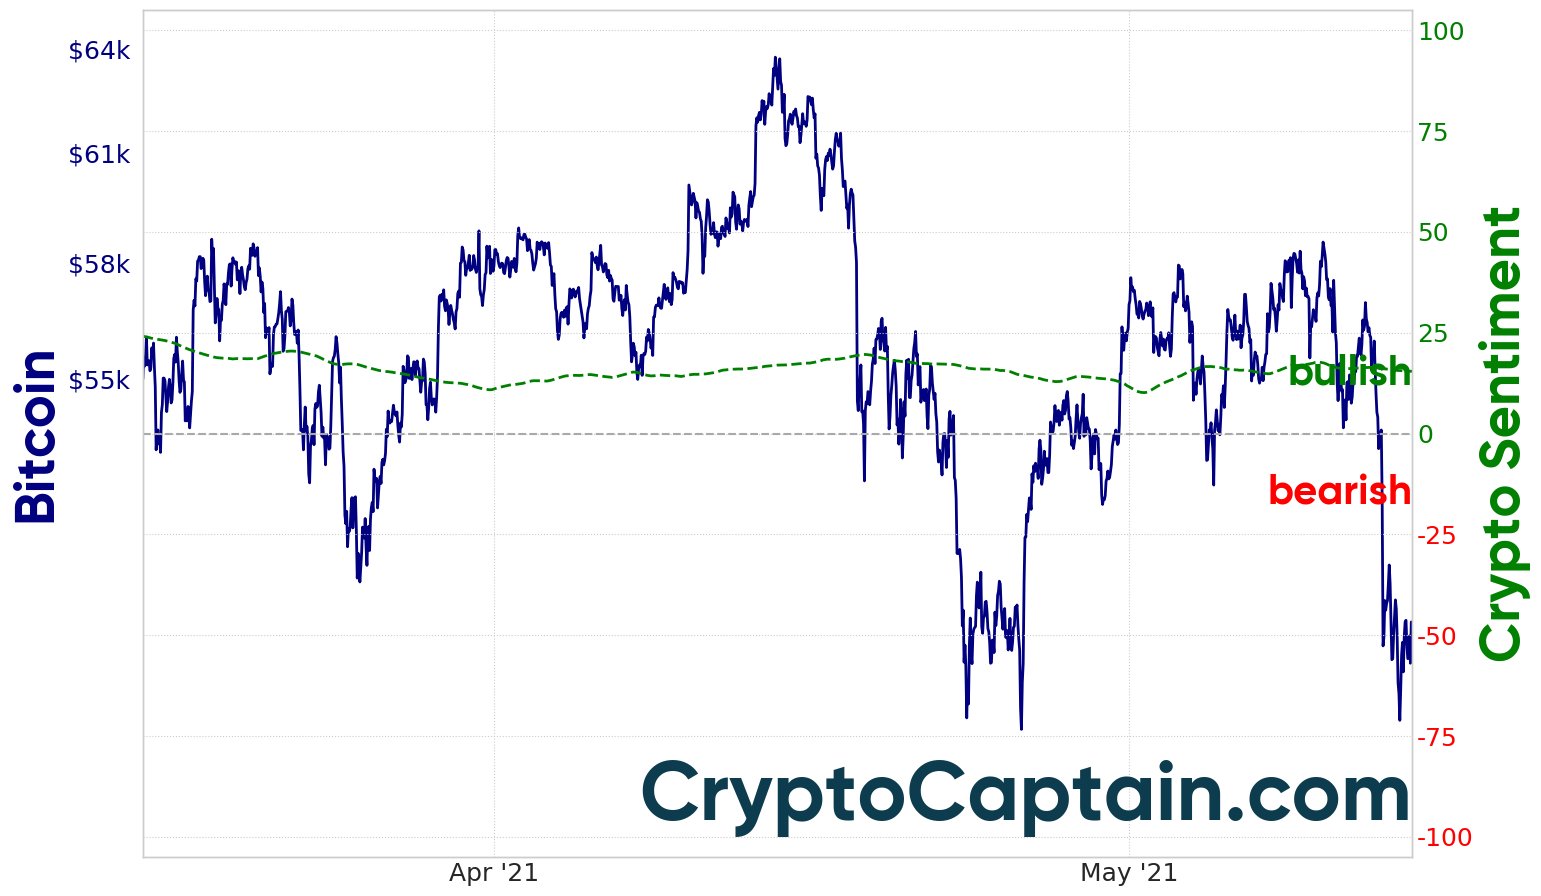 Market Sentiment - CryptoCaptain